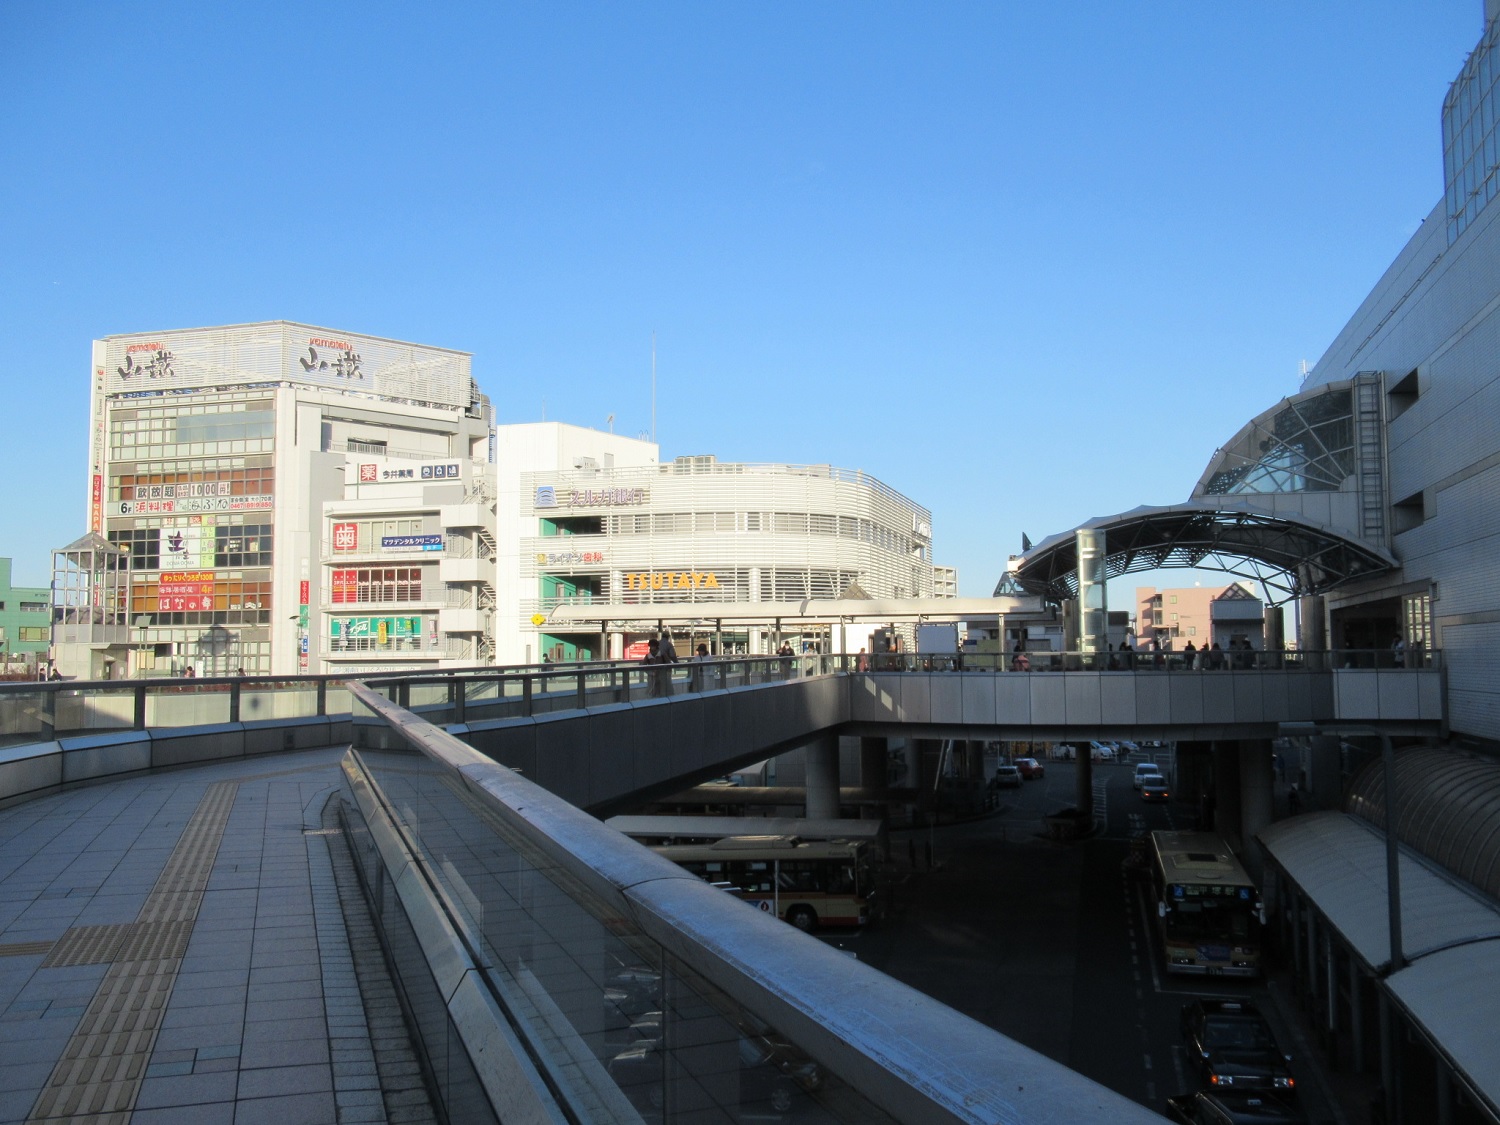 North entrance of Chigasaki Station